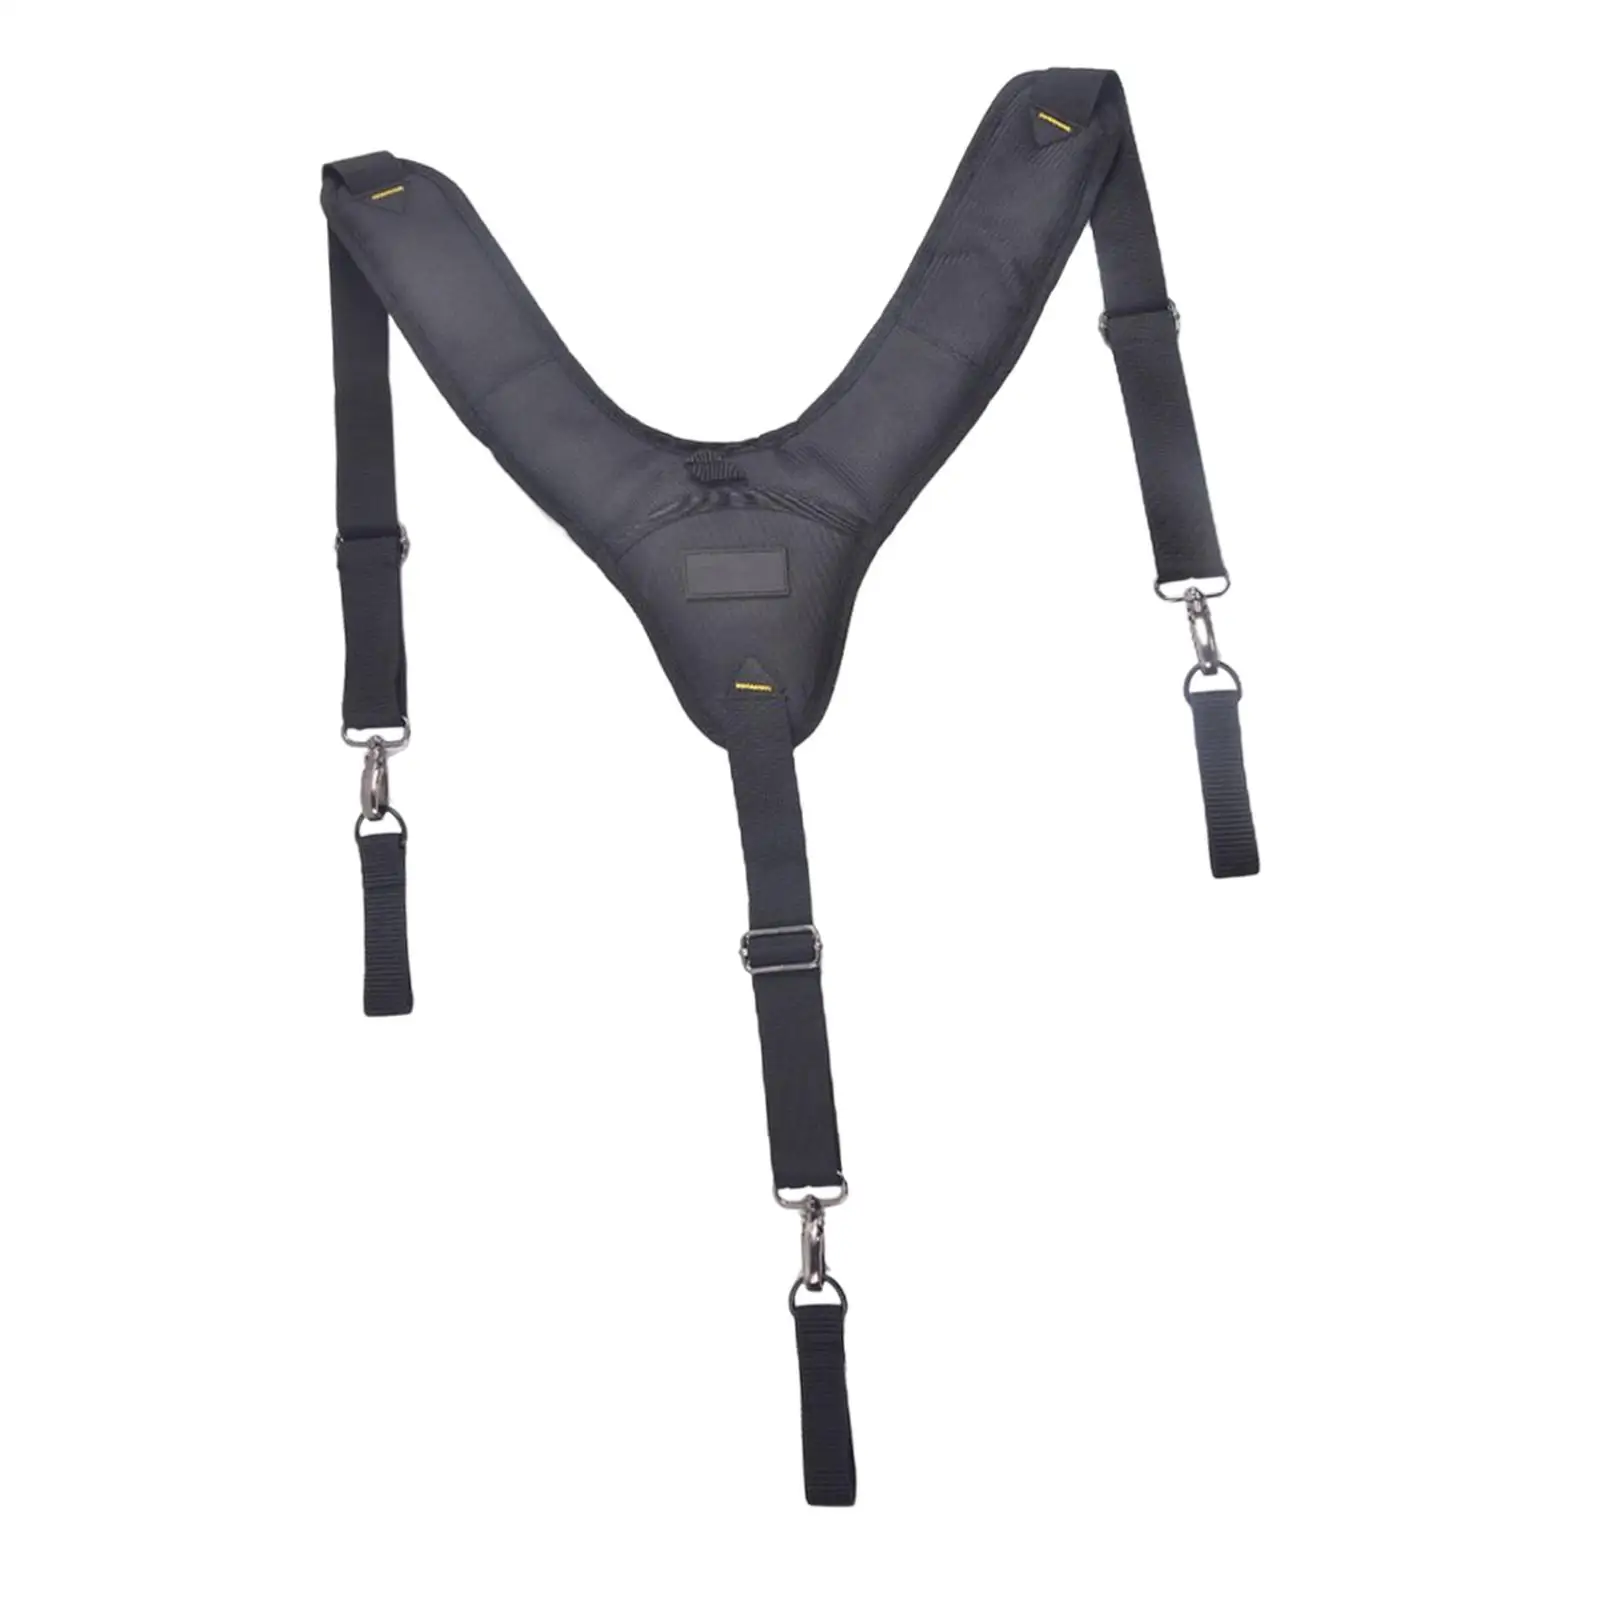 Tool Belt Suspender Construction Tools Heavy Duty 3 Loops Adjustable Shoulder Straps Work Suspenders Belt Harness for Carpenter